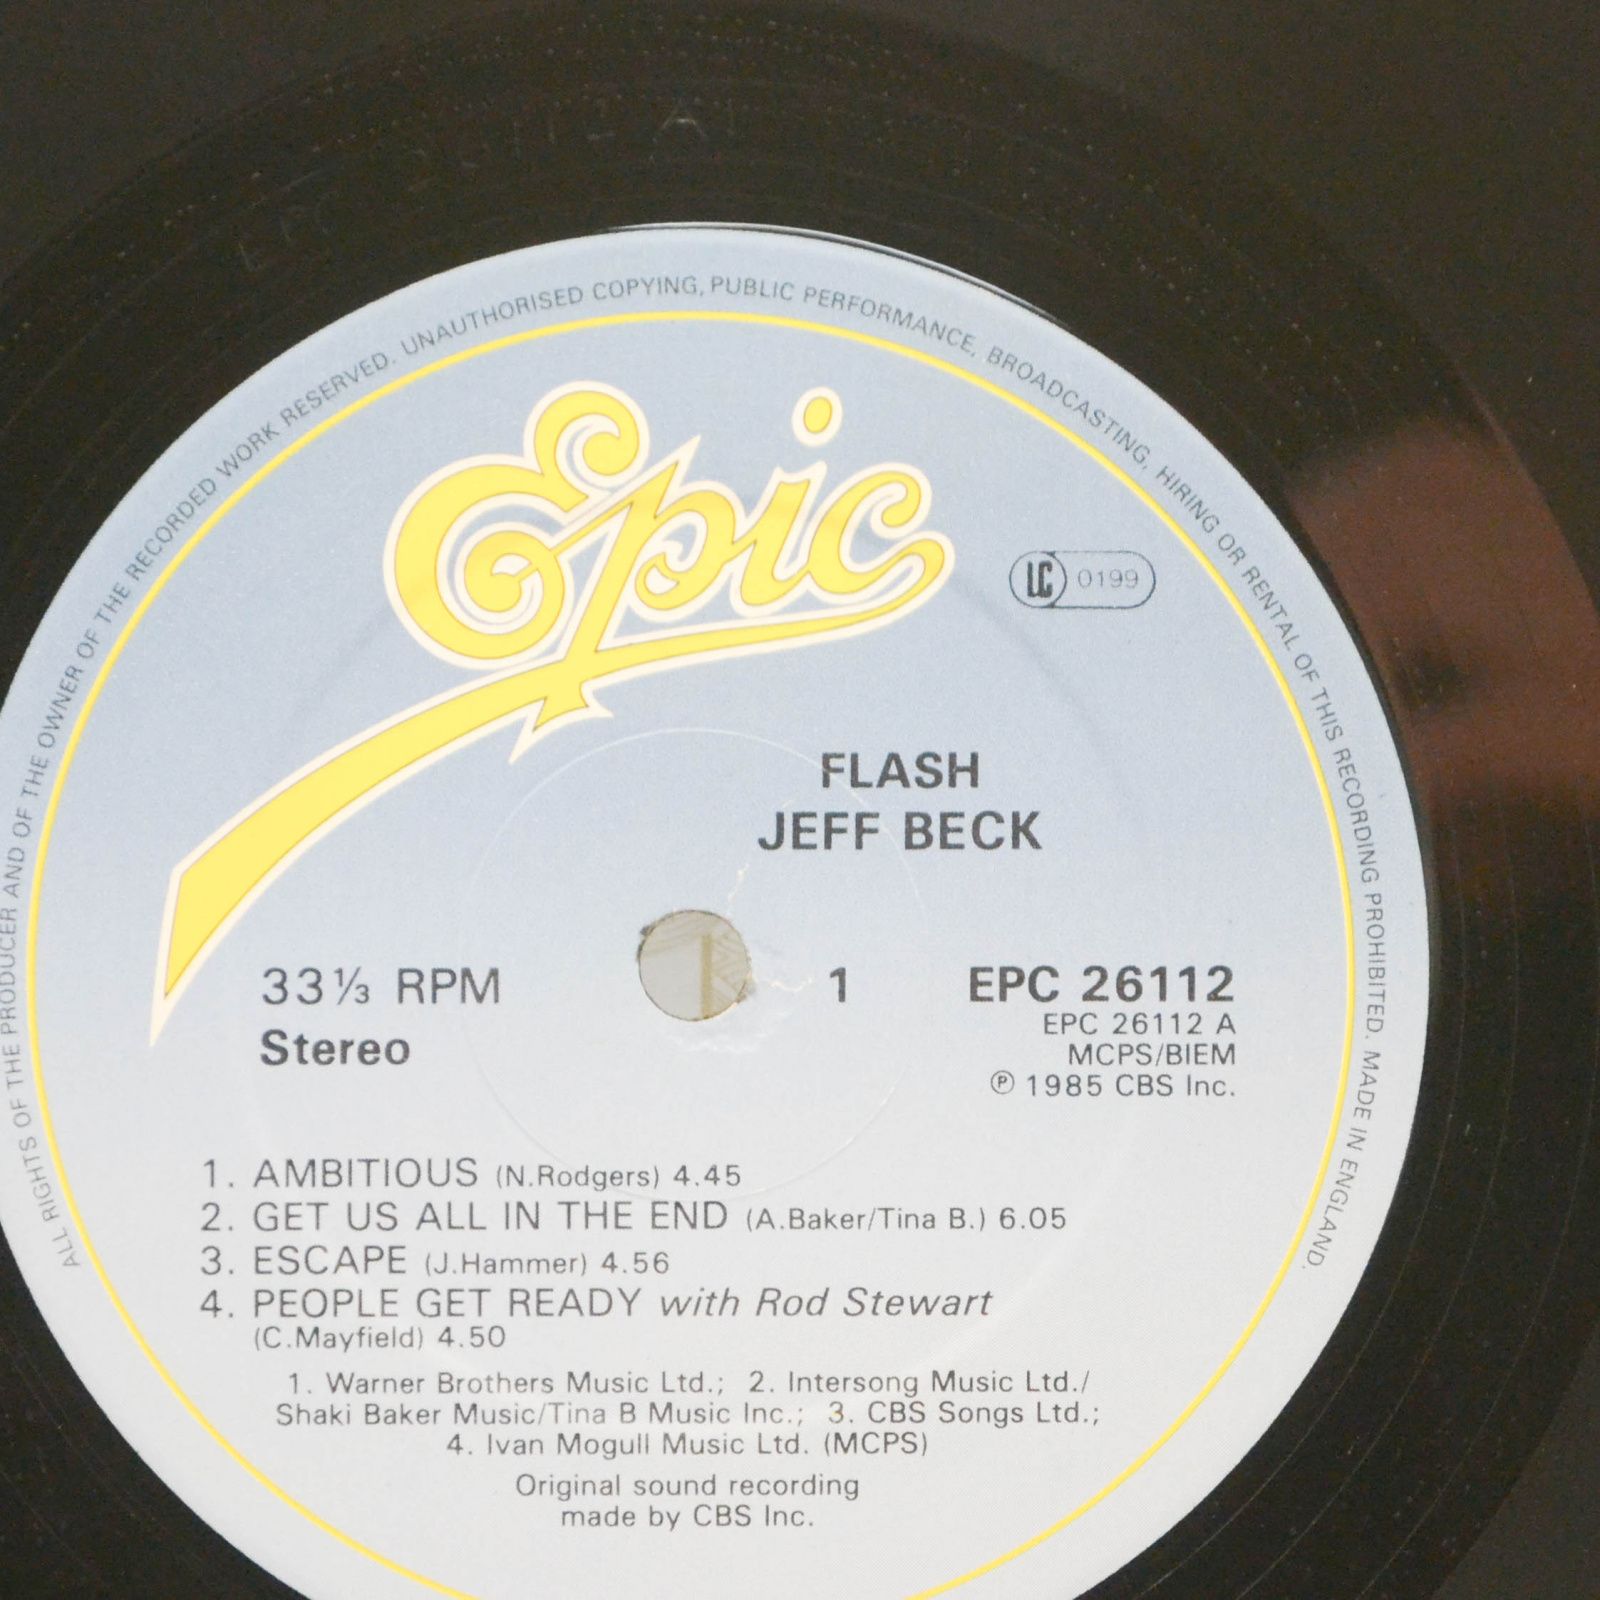 Jeff Beck — Flash (1-st, UK), 1985